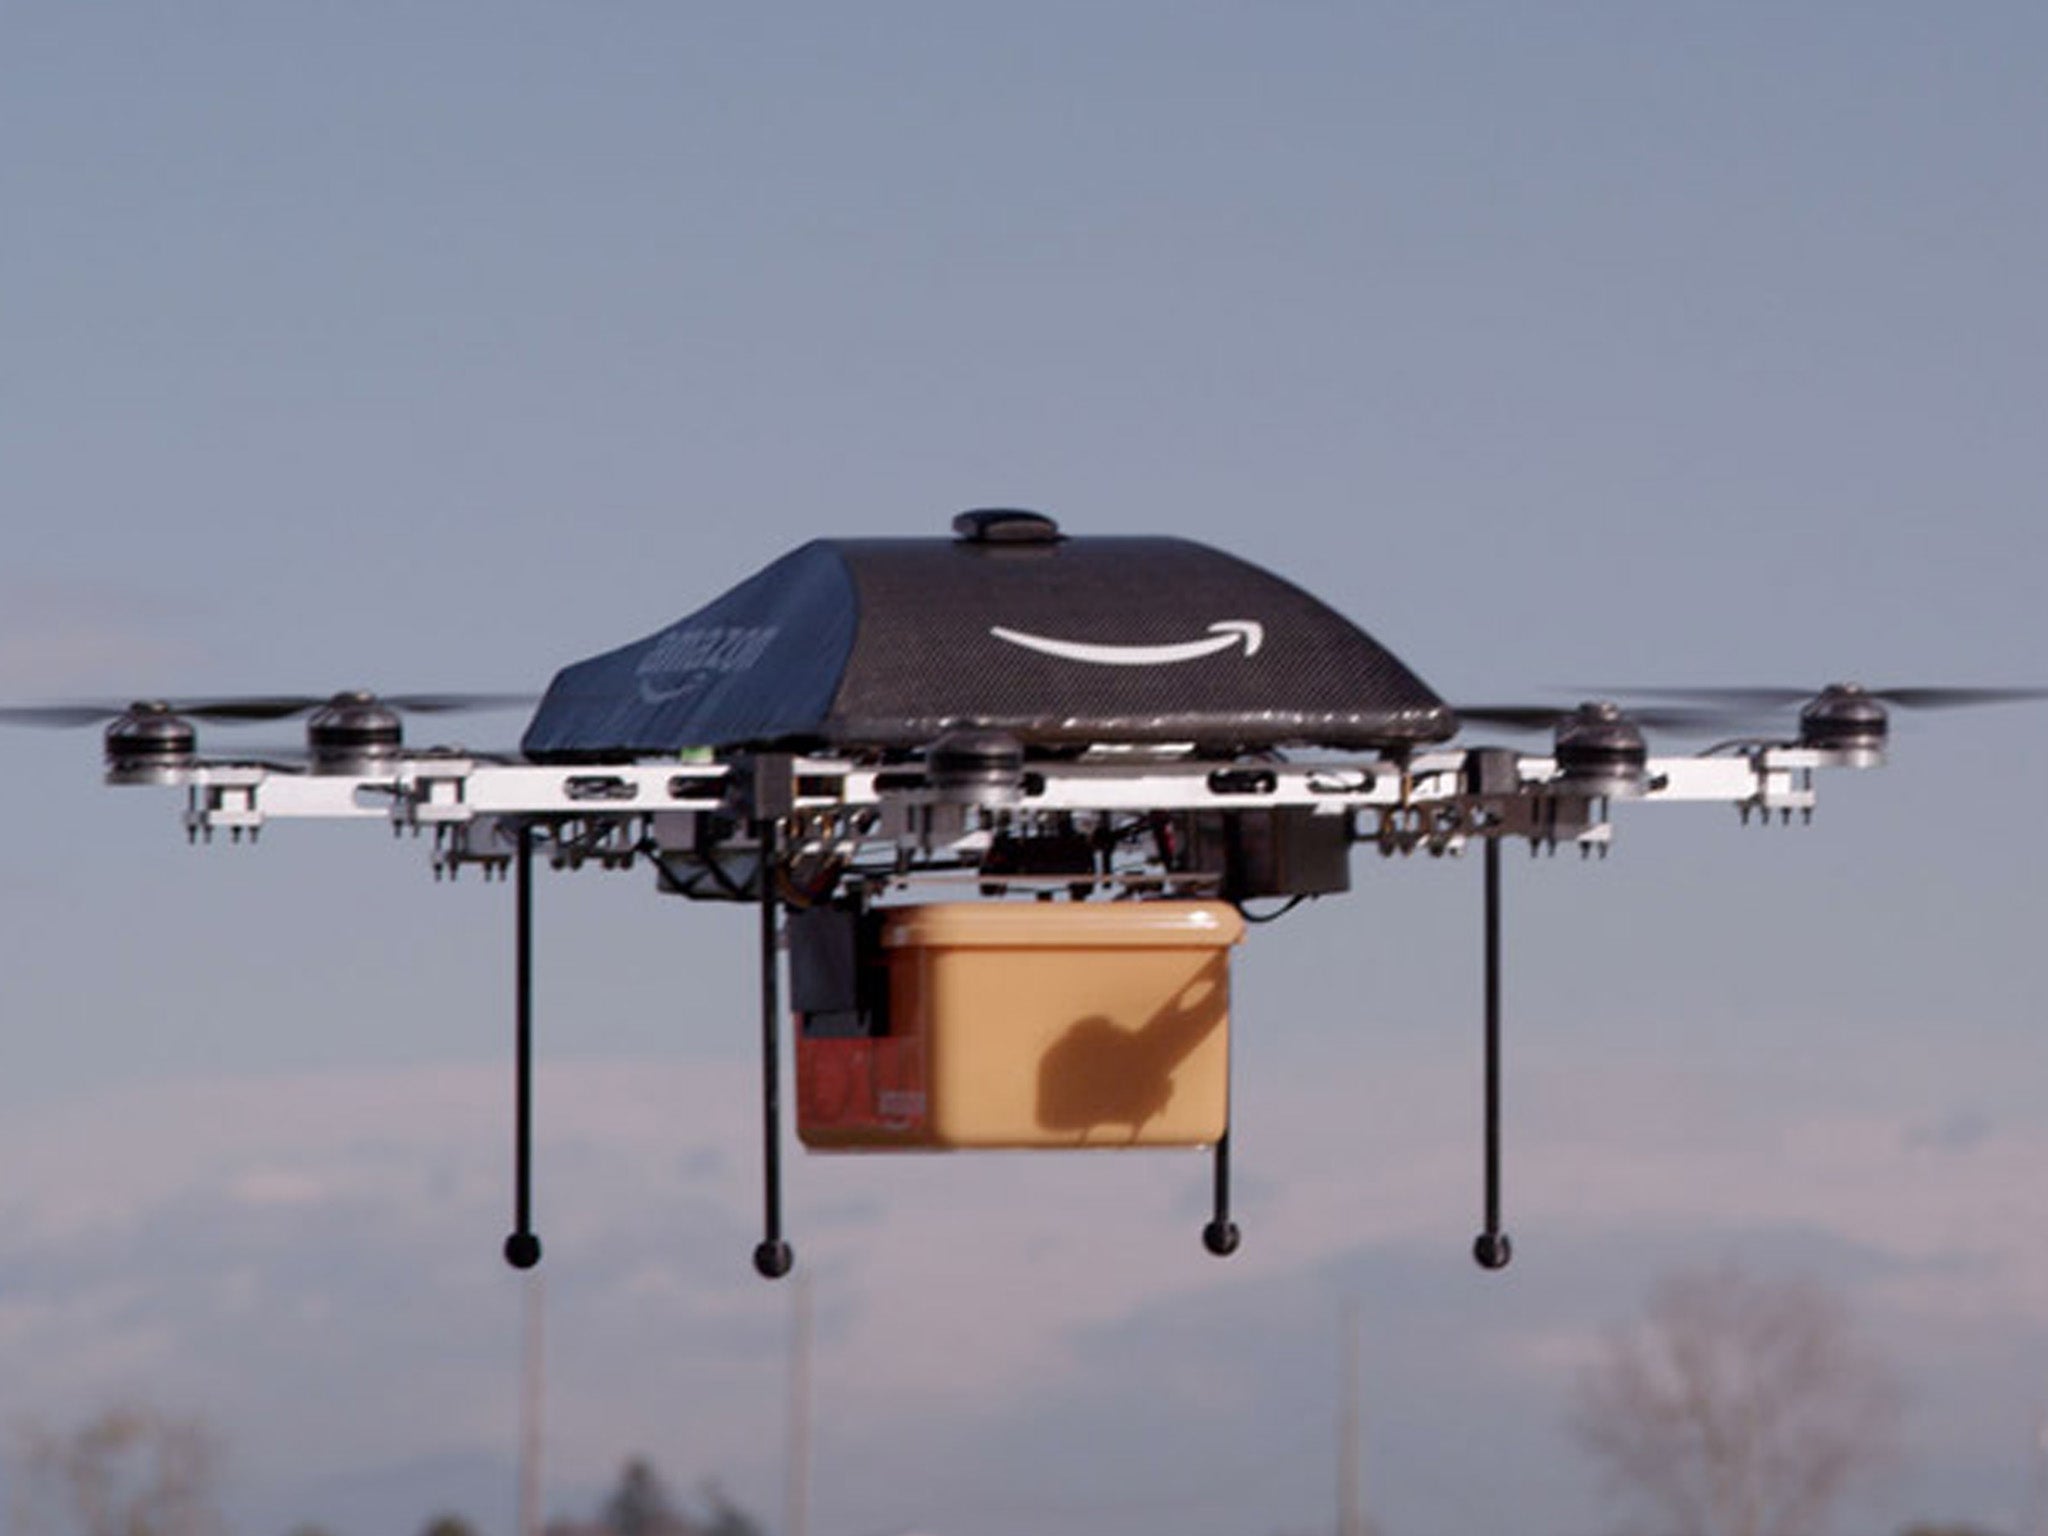 Amazon's drones were unveiled in 2012